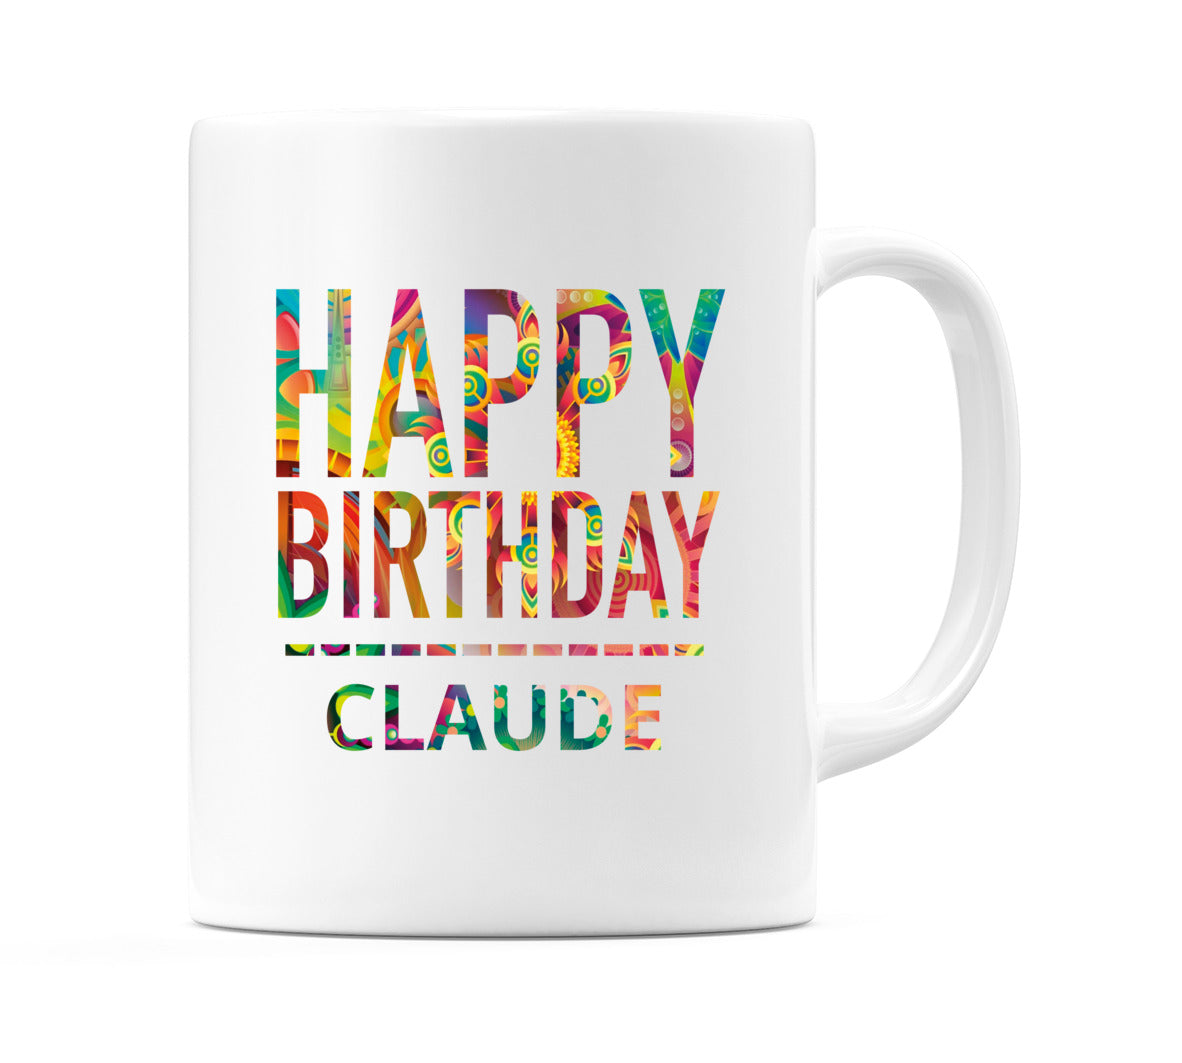 Happy Birthday Claude (Tie Dye Effect) Mug Cup by WeDoMugs